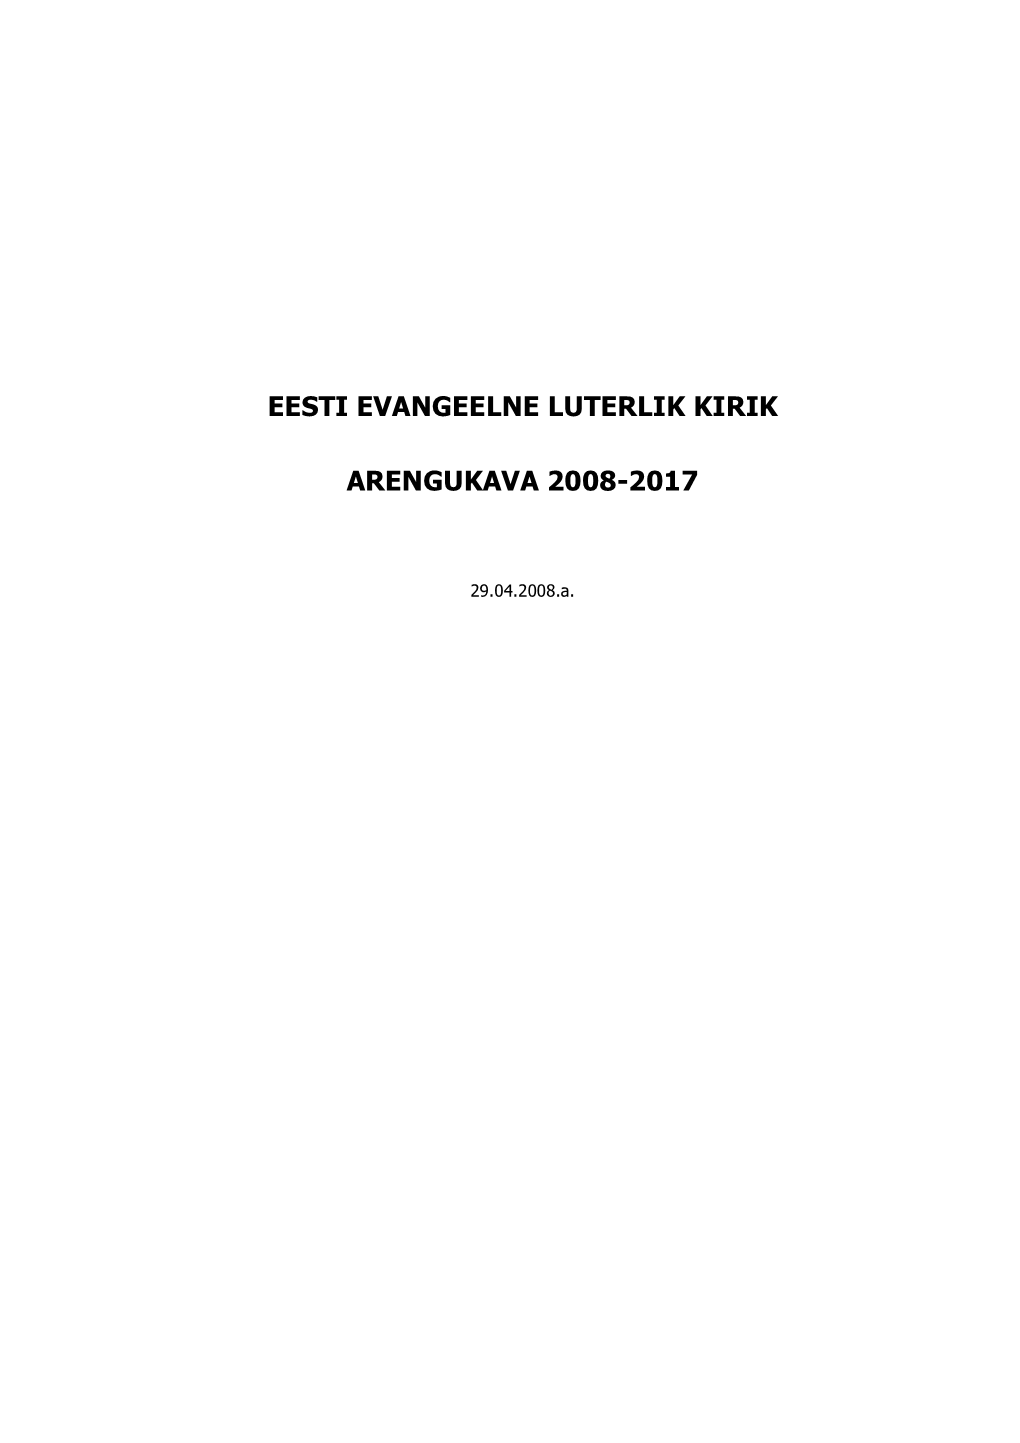 Eesti Evangeelne Luterlik Kirik Arengukava 2008-2017